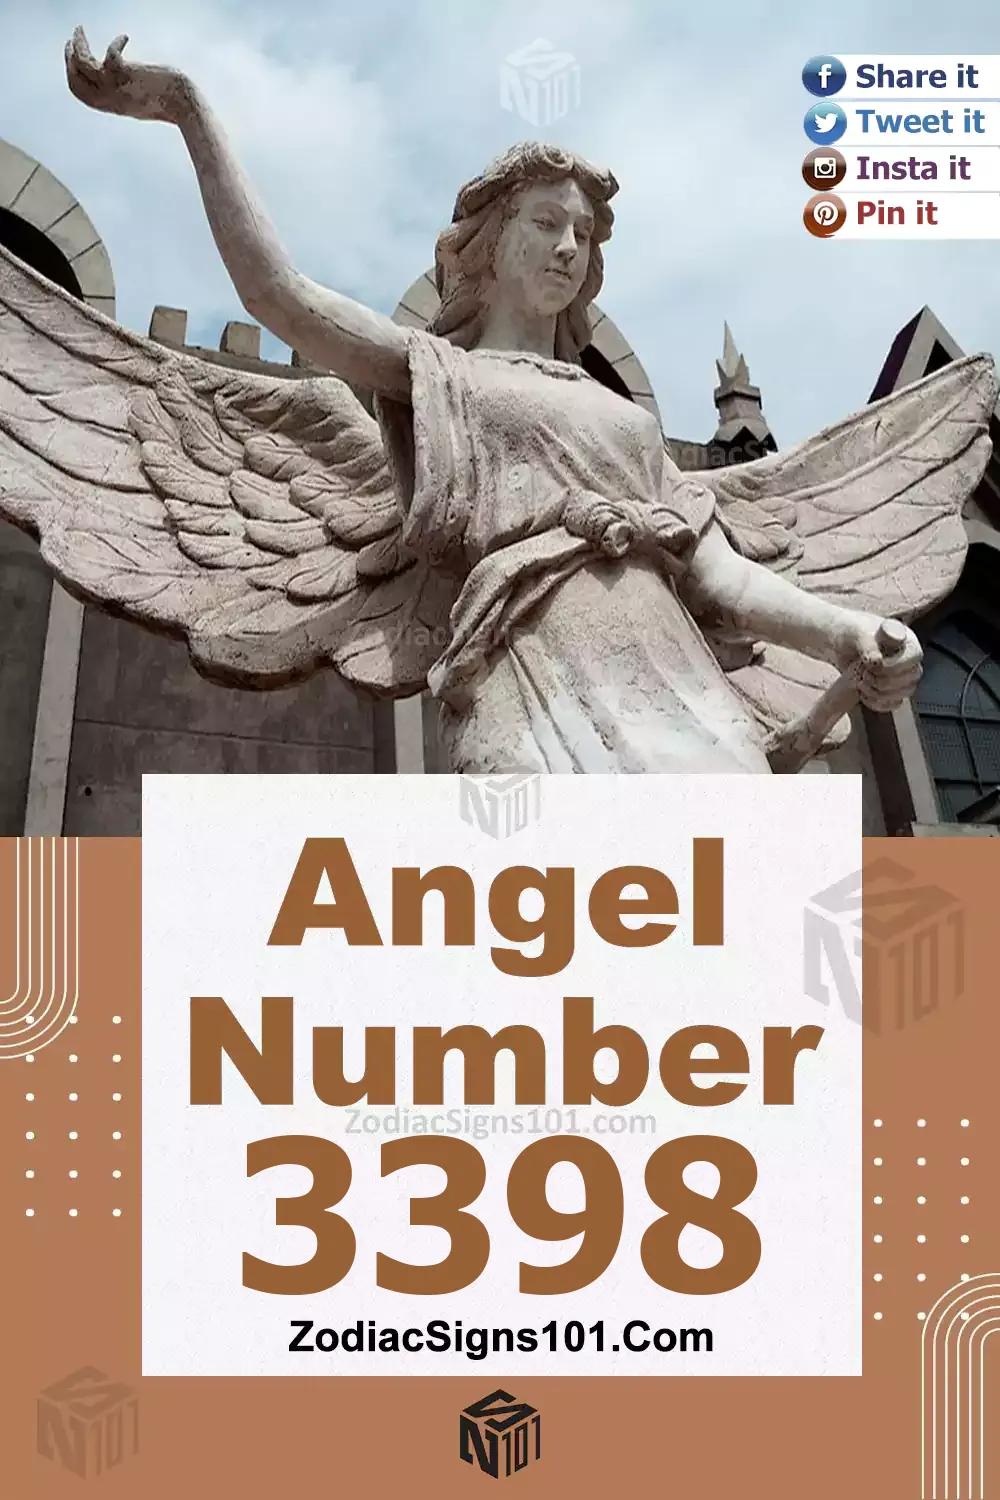 3398-Angel-Number-Meaning.jpg